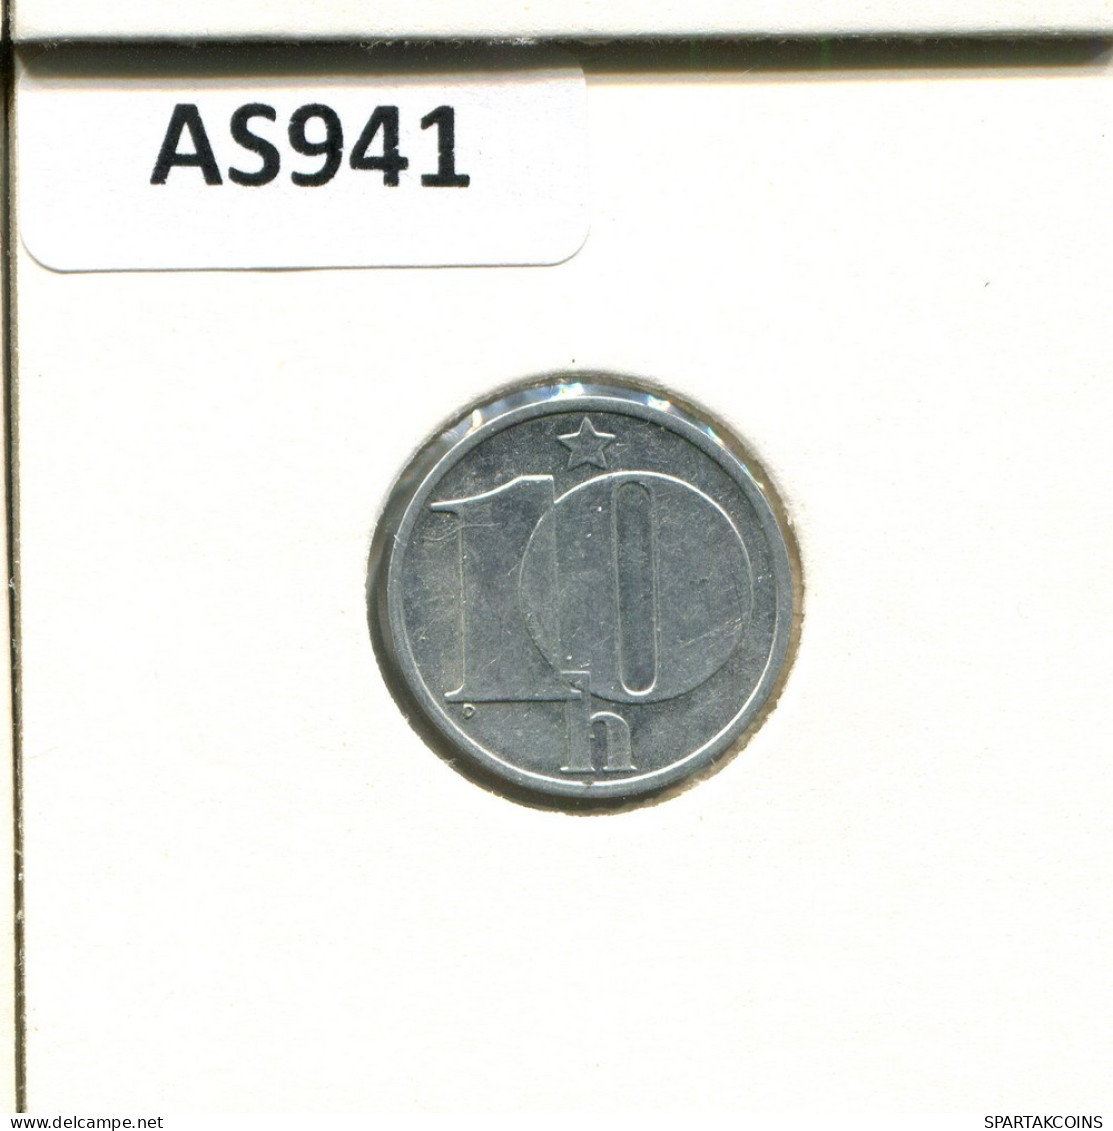 10 HALERU 1985 CZECHOSLOVAKIA Coin #AS941.U.A - Czechoslovakia